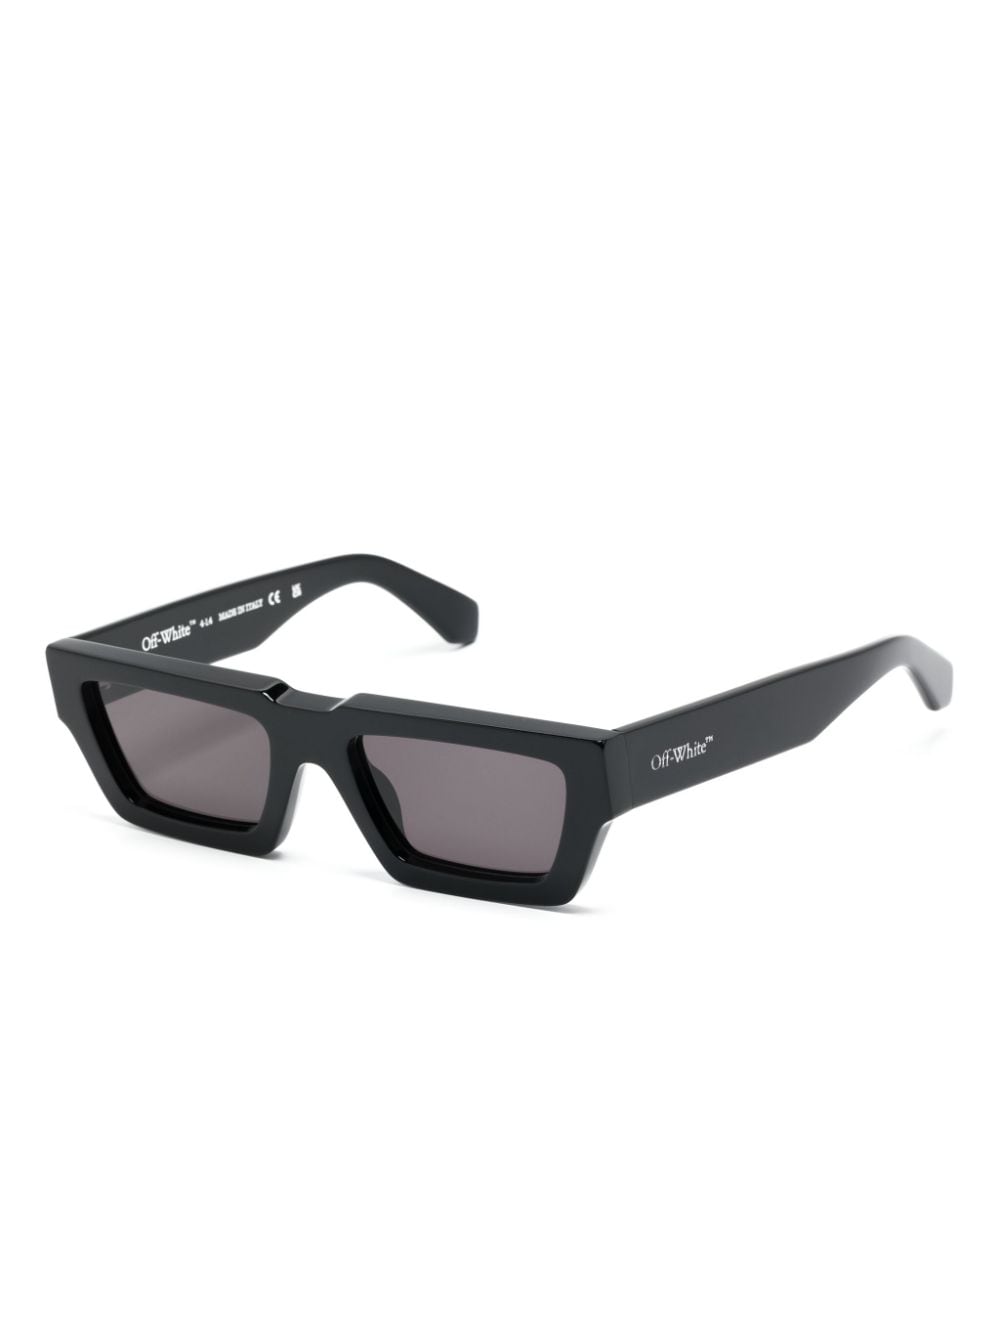 Off-White Eyewear Manchester zonnebril met rechthoekig montuur - Zwart